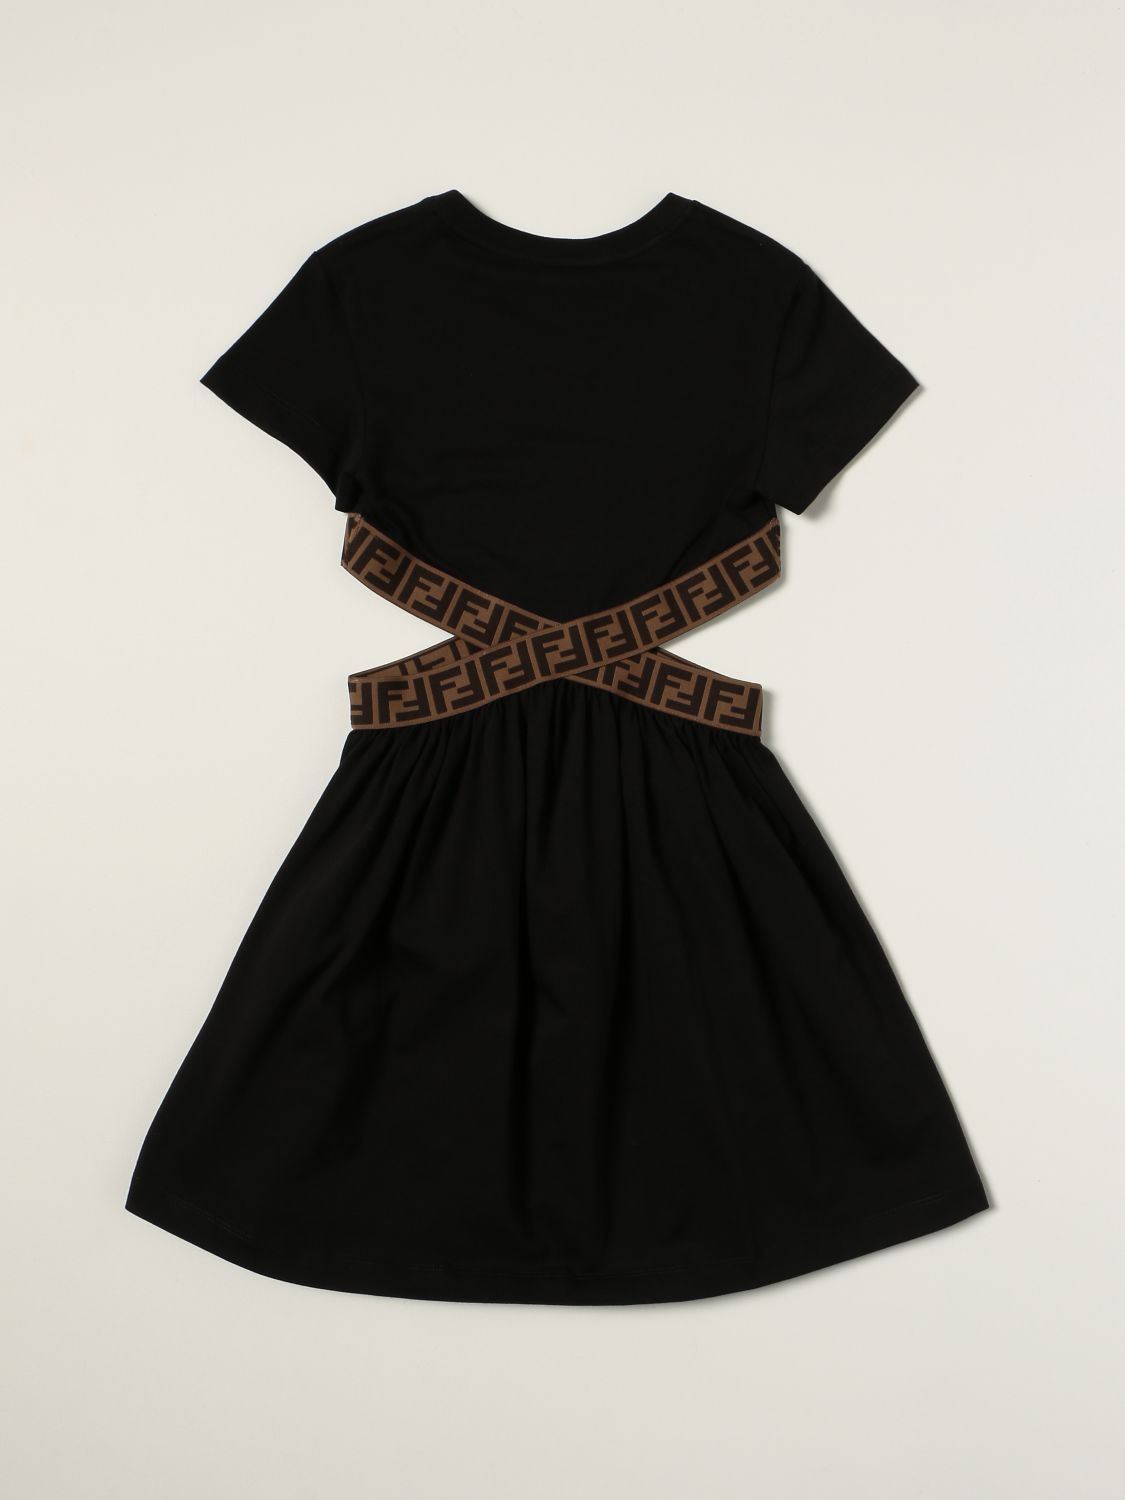 FENDI: cut-out cotton dress | Dress Fendi Kids Black | Dress Fendi